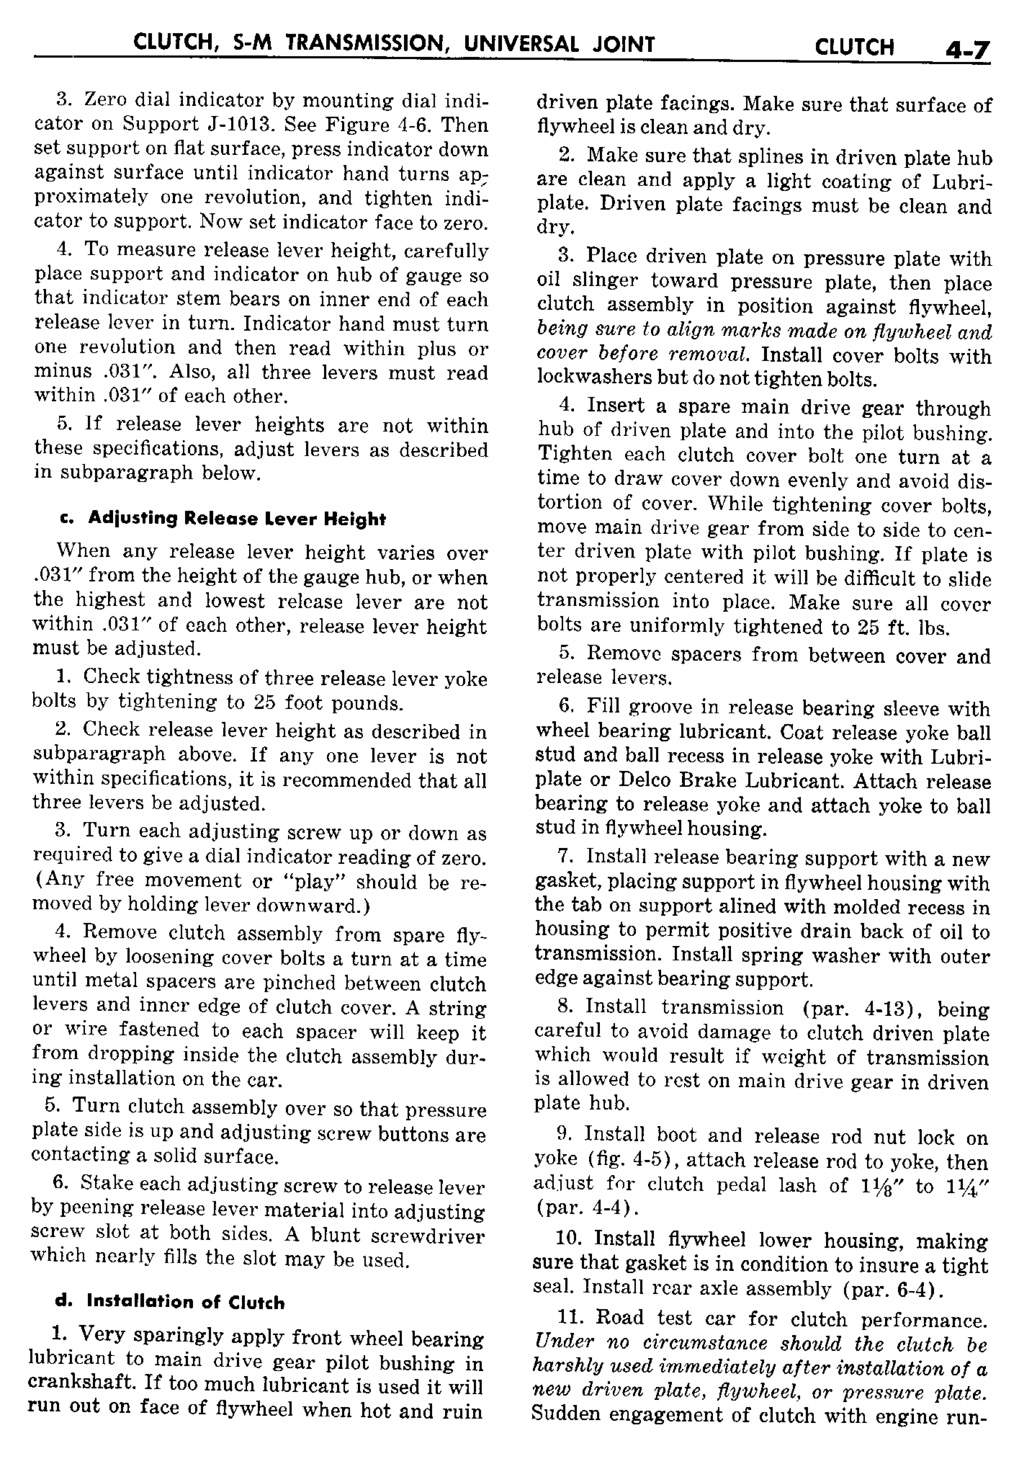 n_05 1960 Buick Shop Manual - Clutch & Man Trans-007-007.jpg